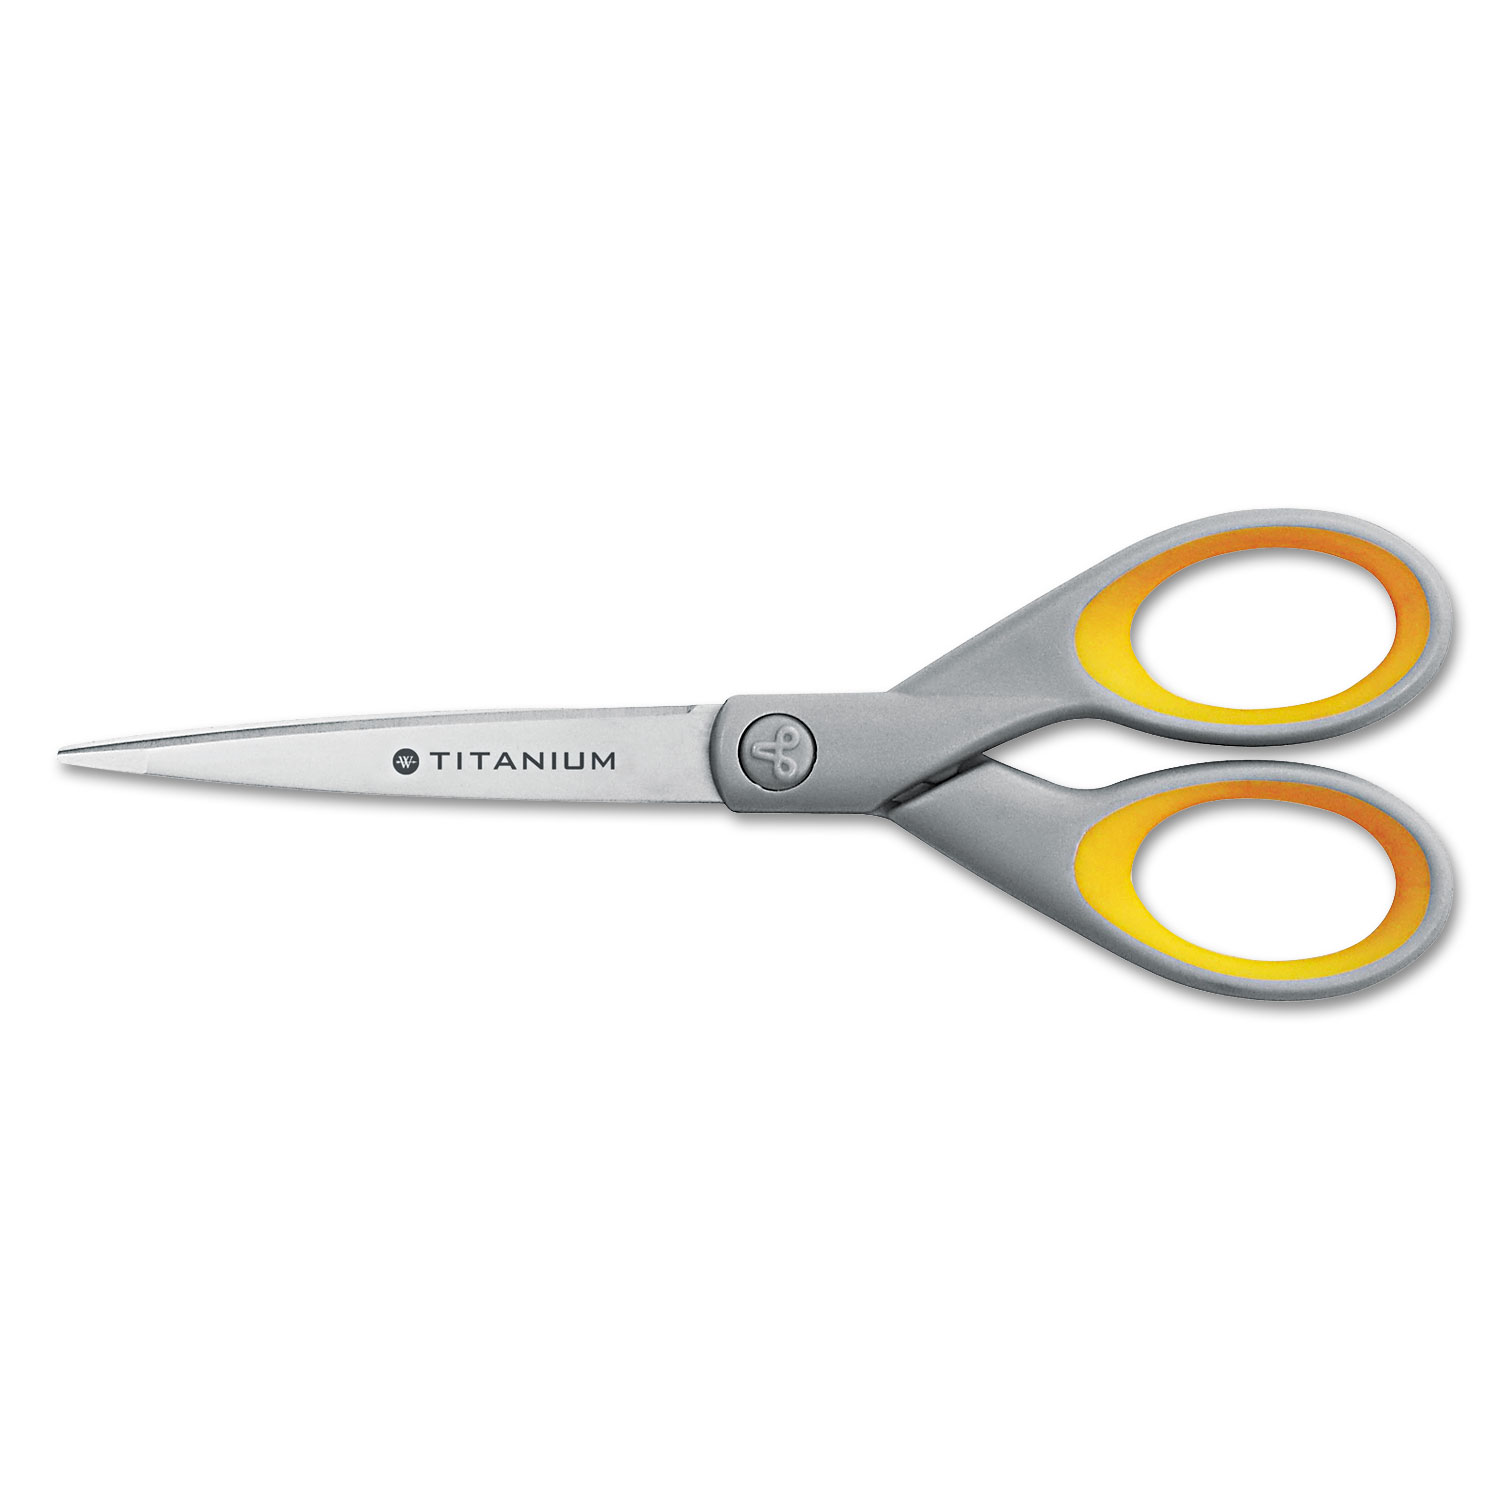 Westcott Titanium Bonded Scissors Set for sale online Acm13824 